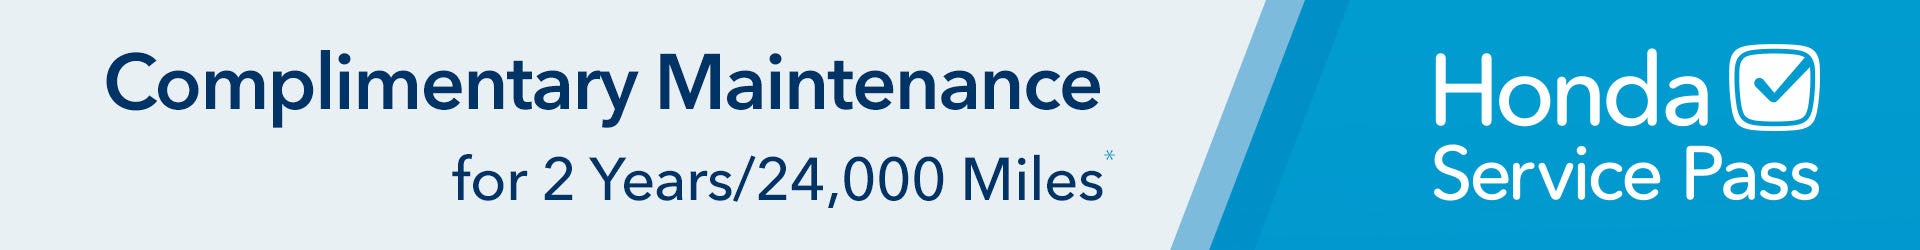 Complimentary Maintenance for 2 years / 24,000 Miles Honda Service Pass | Tameron Honda in Birmingham AL